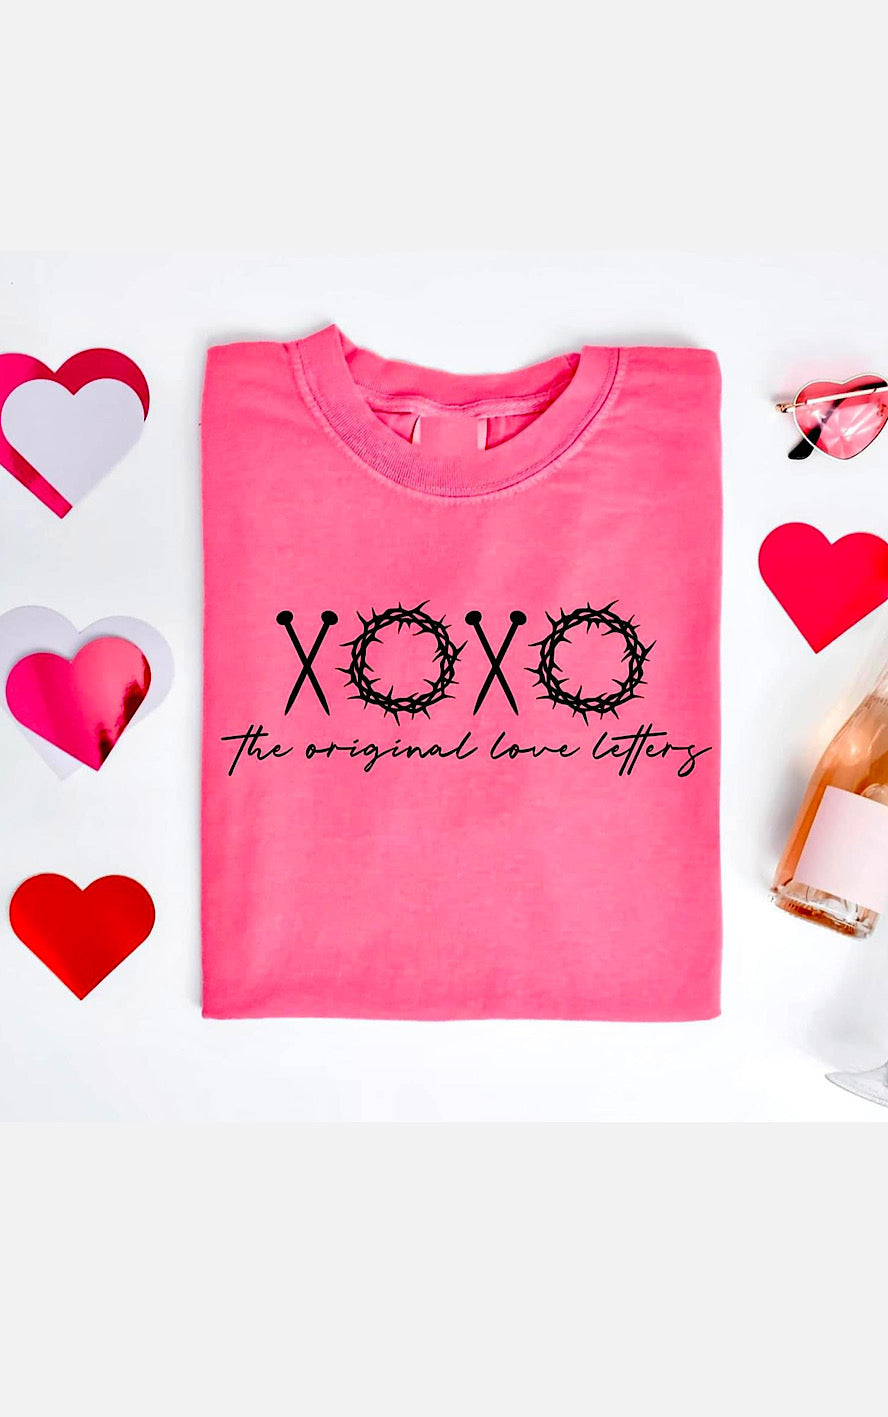 XOXO Original Love Letters Comfort Colors Pink Tee, SM-3X